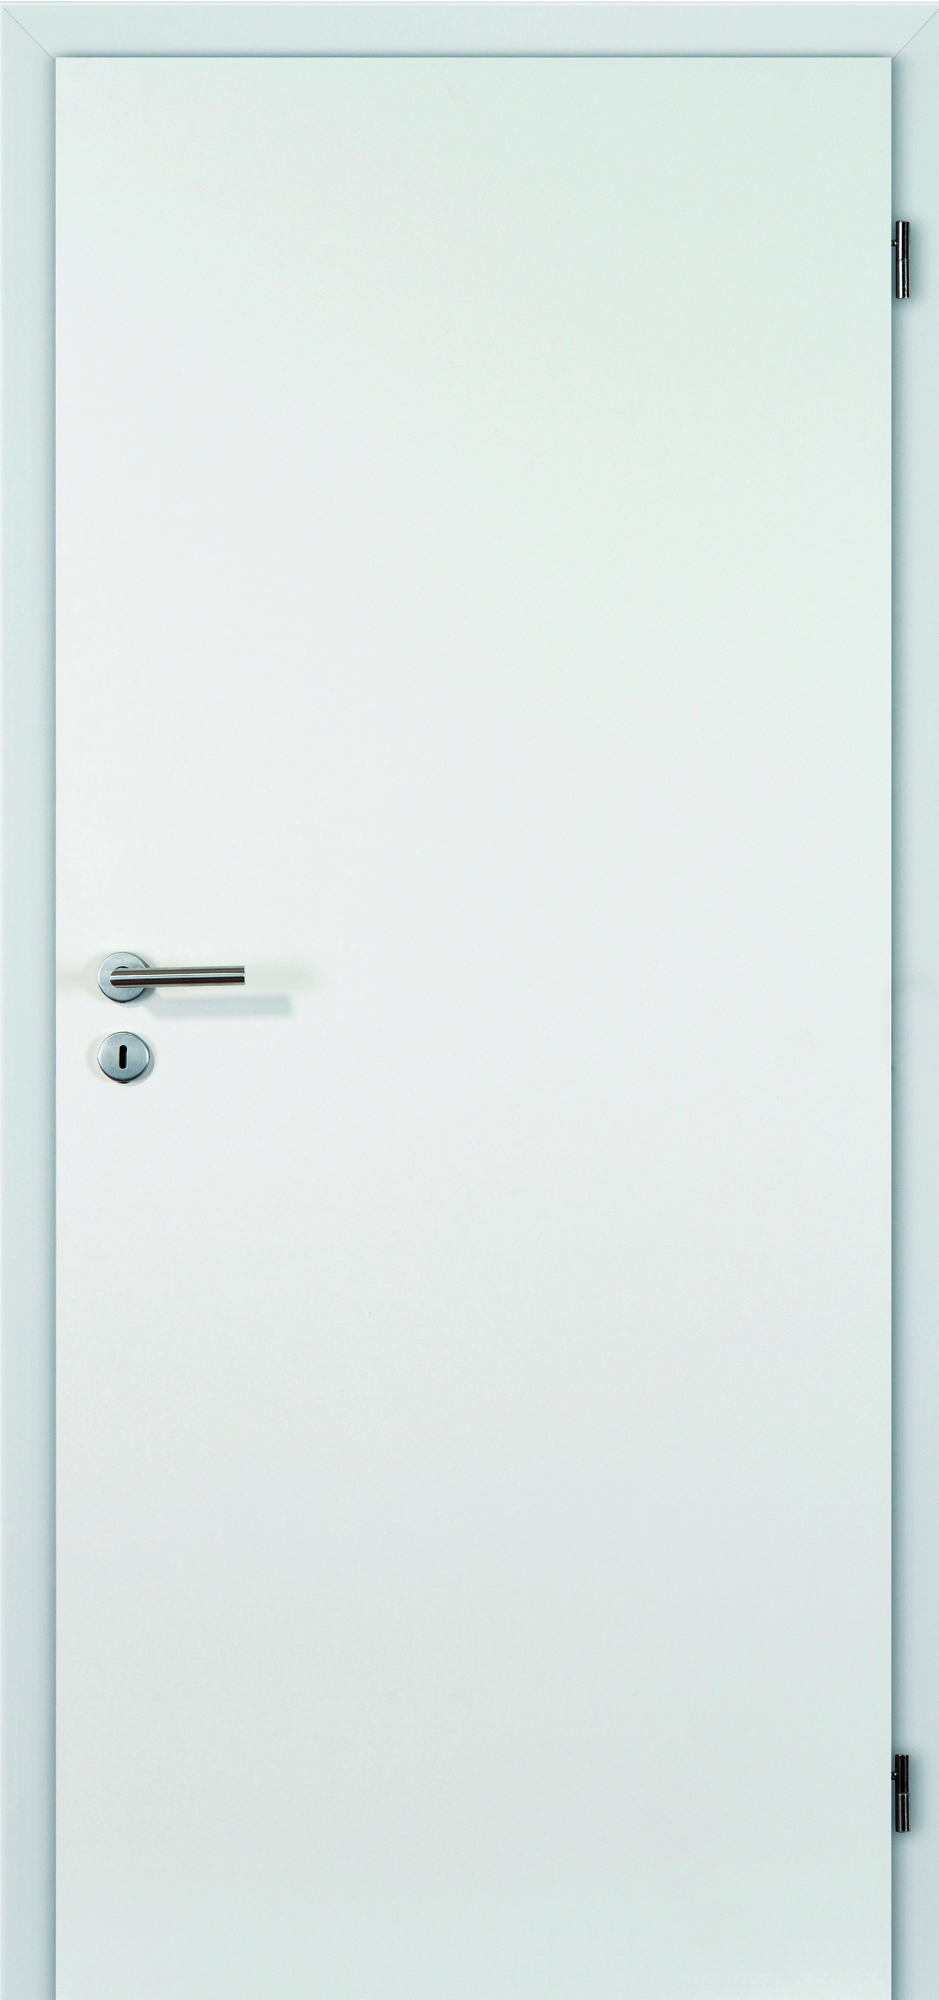 Dveře interiérové Doornite BIANKA voština bílý lak levá 900 mm